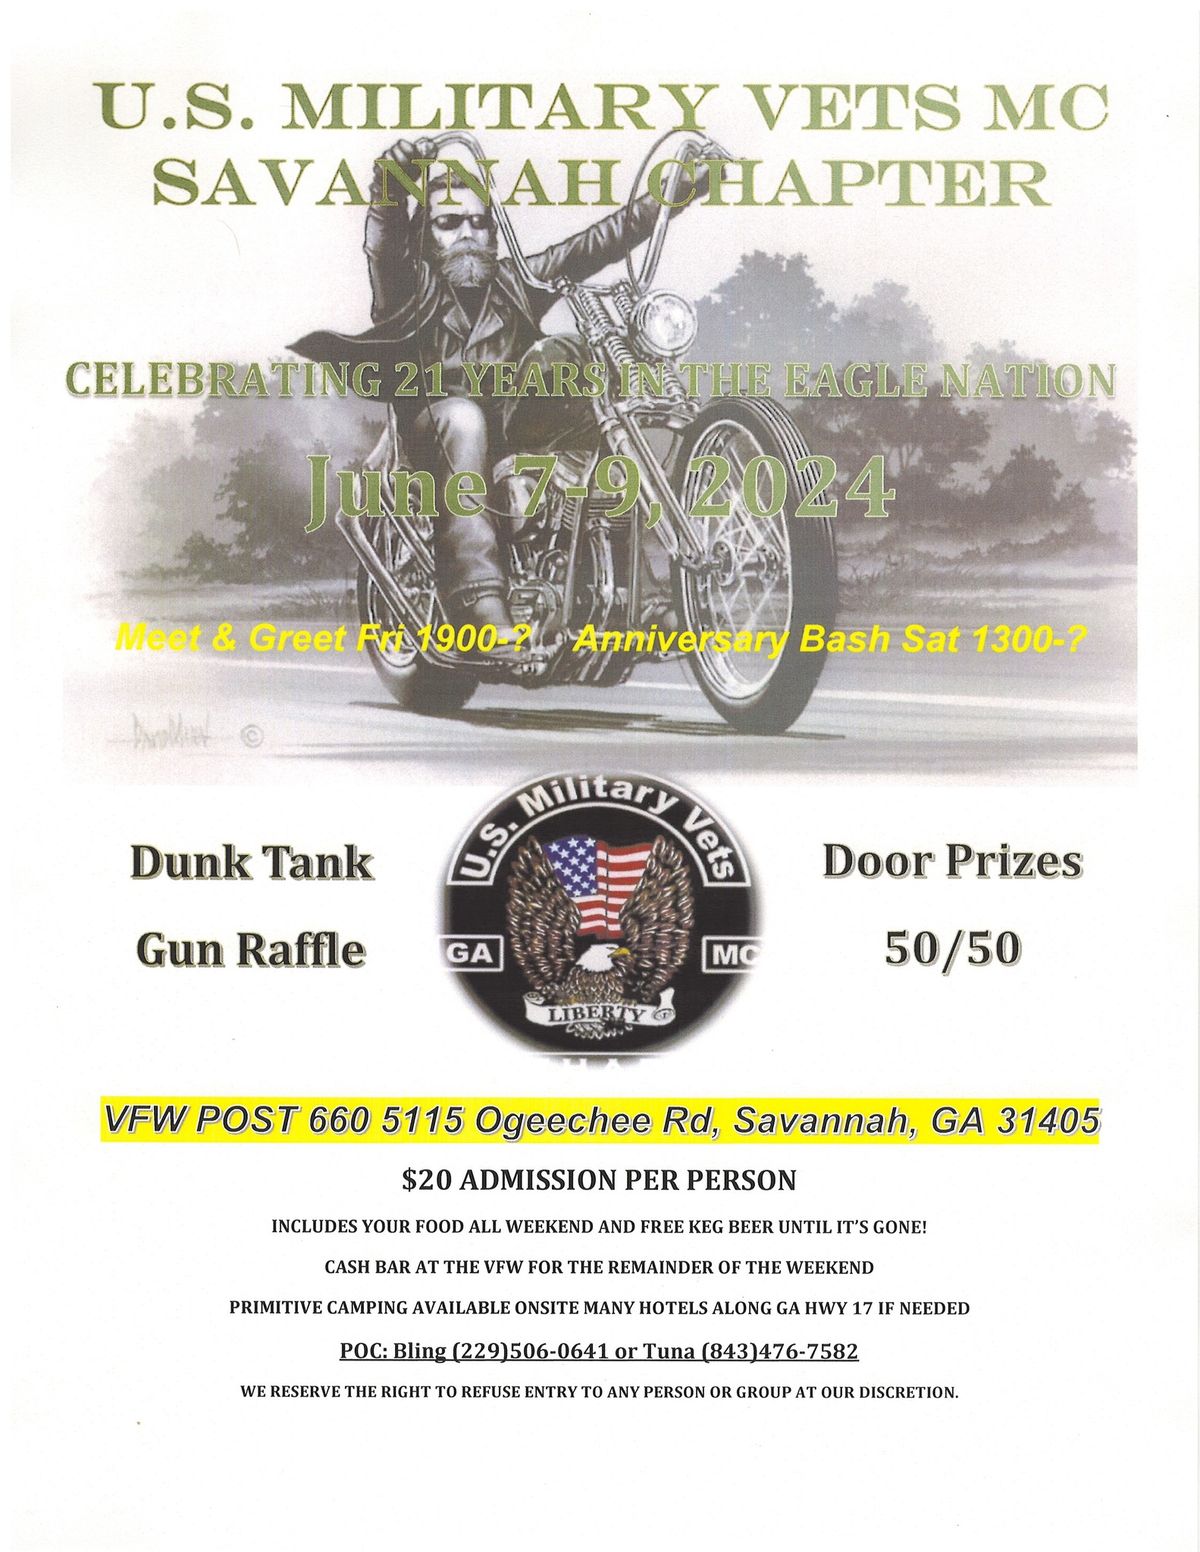 U.S. Military Vets - Savannah, GA Annual Charter Party